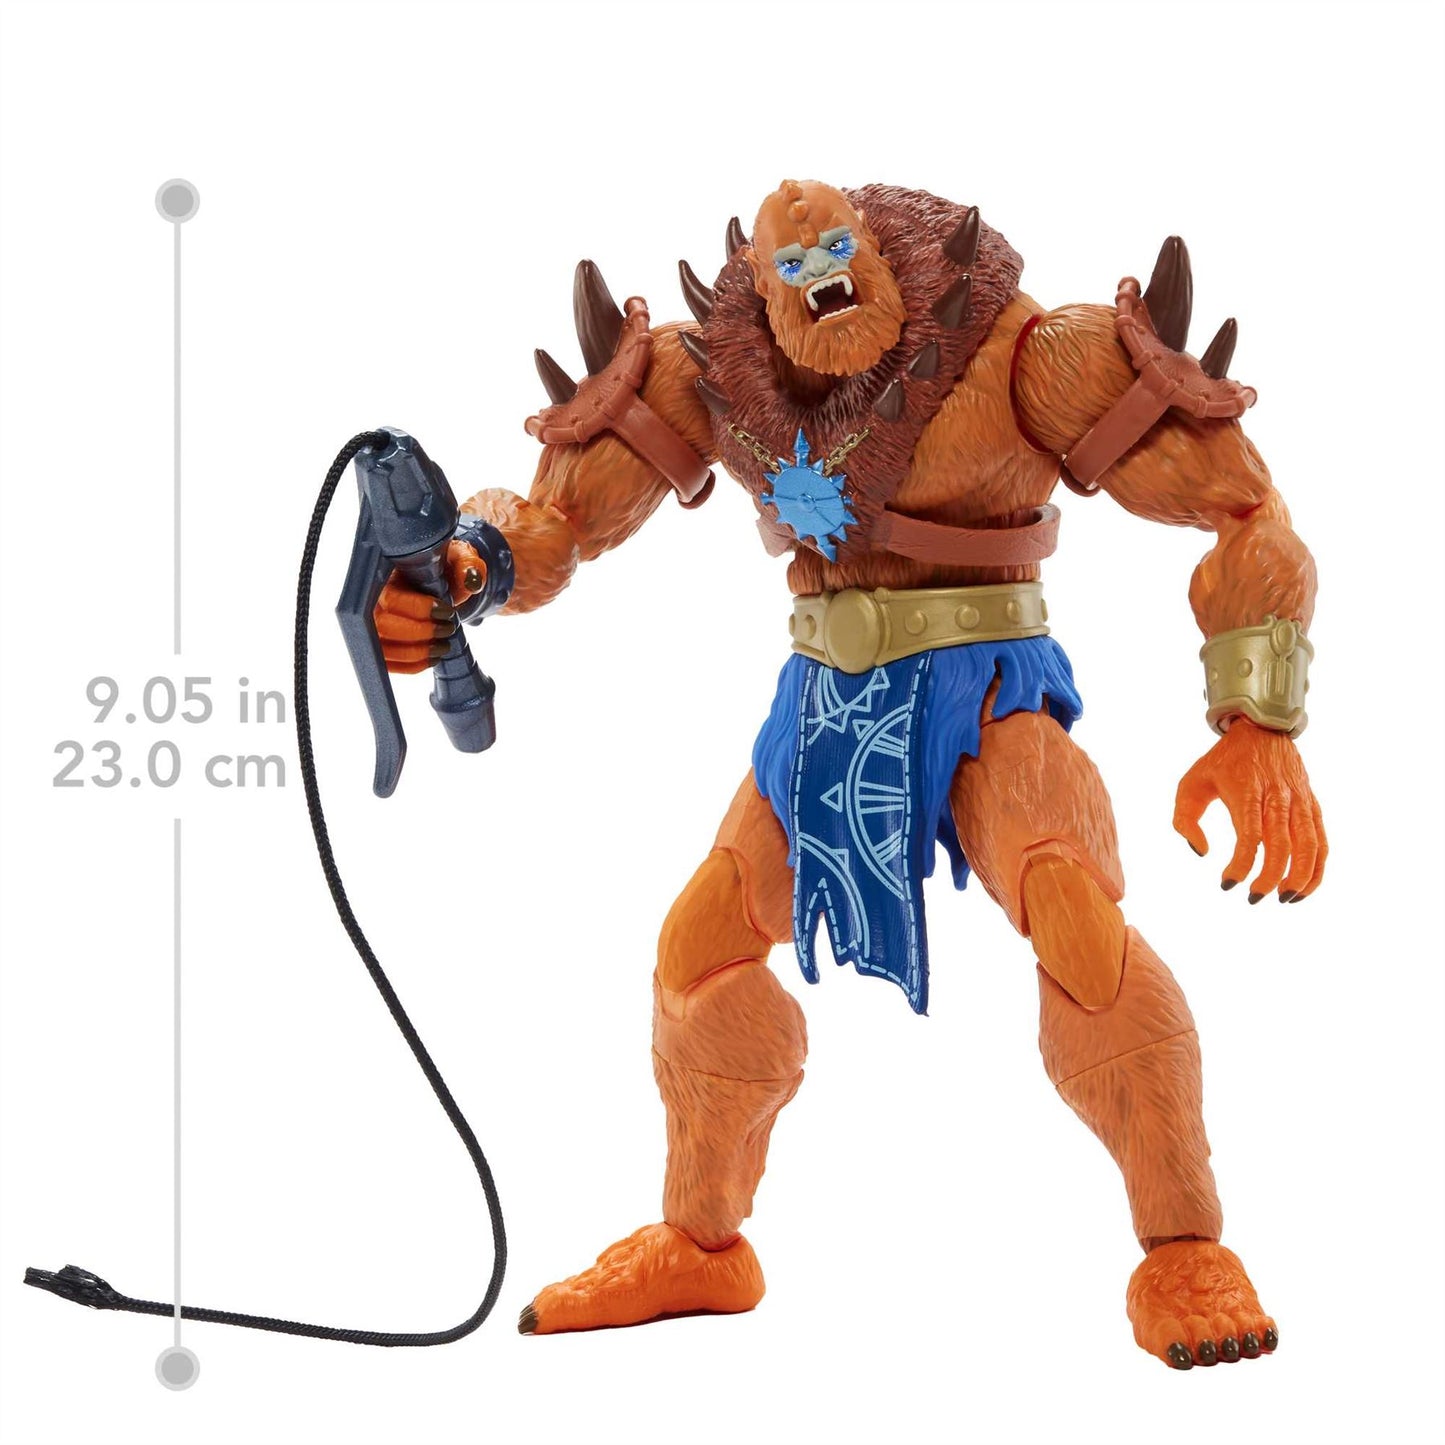 Mattel Masters of the Universe Masterverse New Eternia Oversized Beast Man Action Figure 194735059089